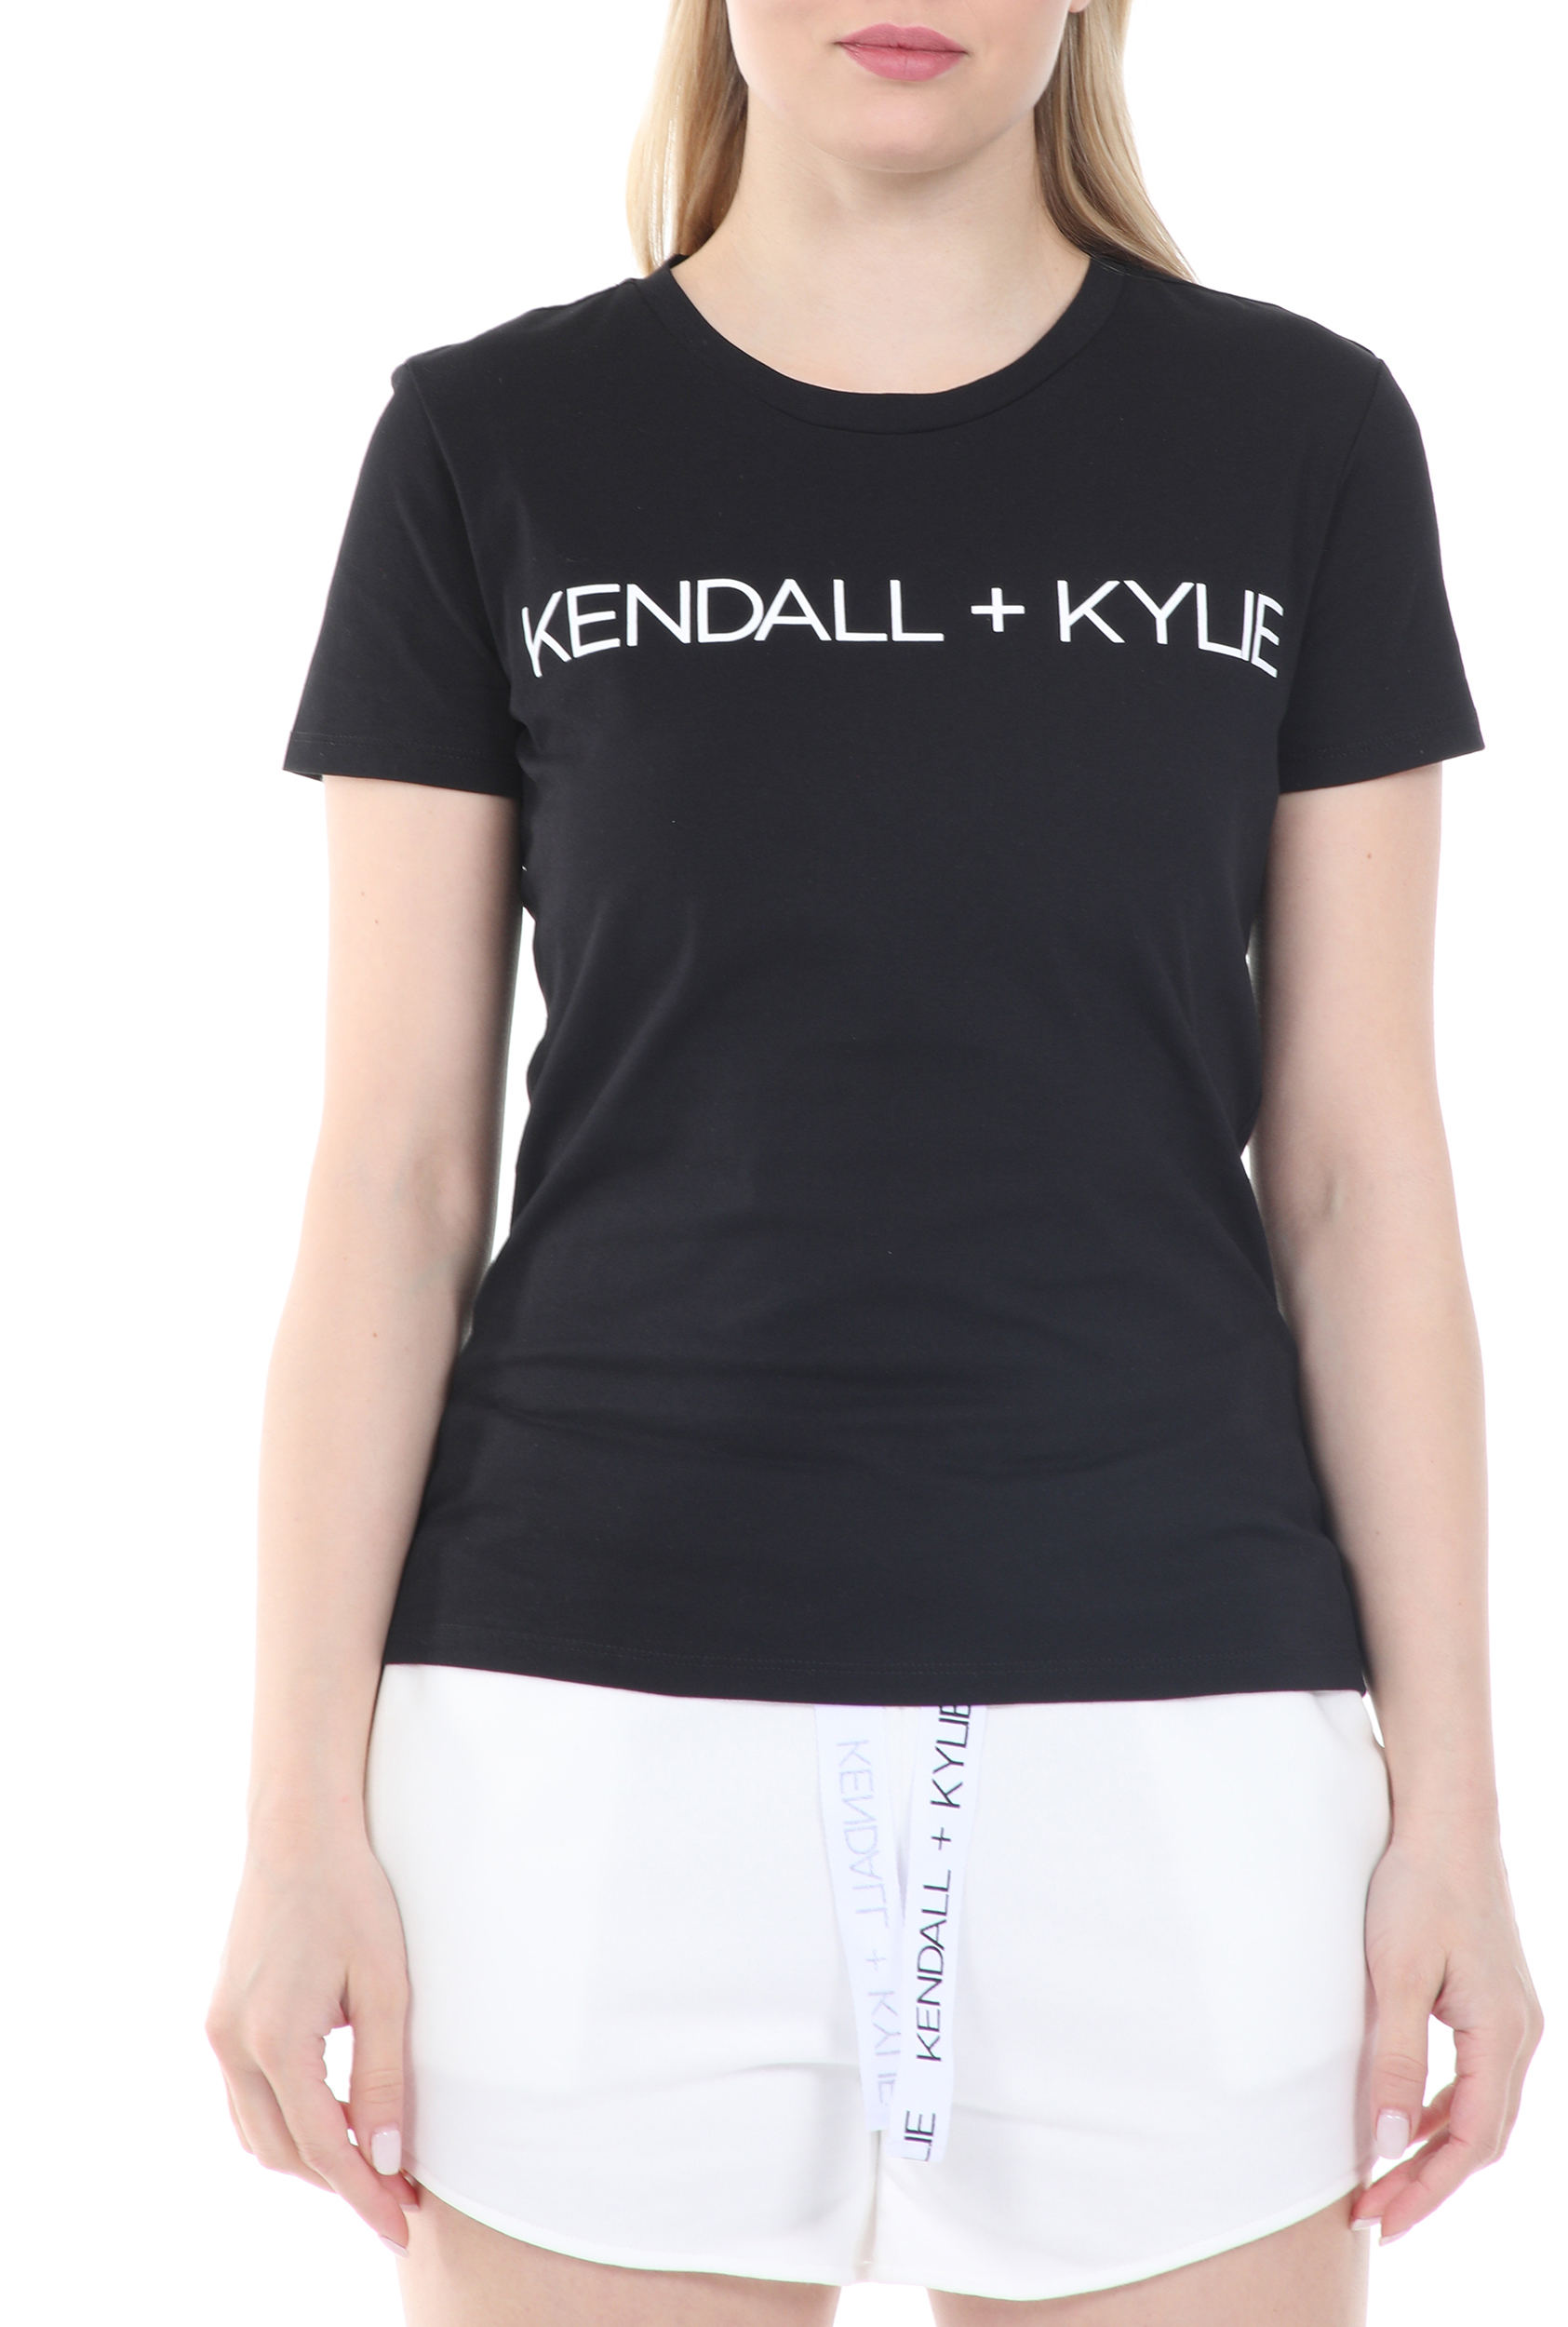 KENDALL + KYLIE – Γυναικείο t-shirt KENDALL + KYLIE BASIC LOGO μαύρο 1811194.0-0071